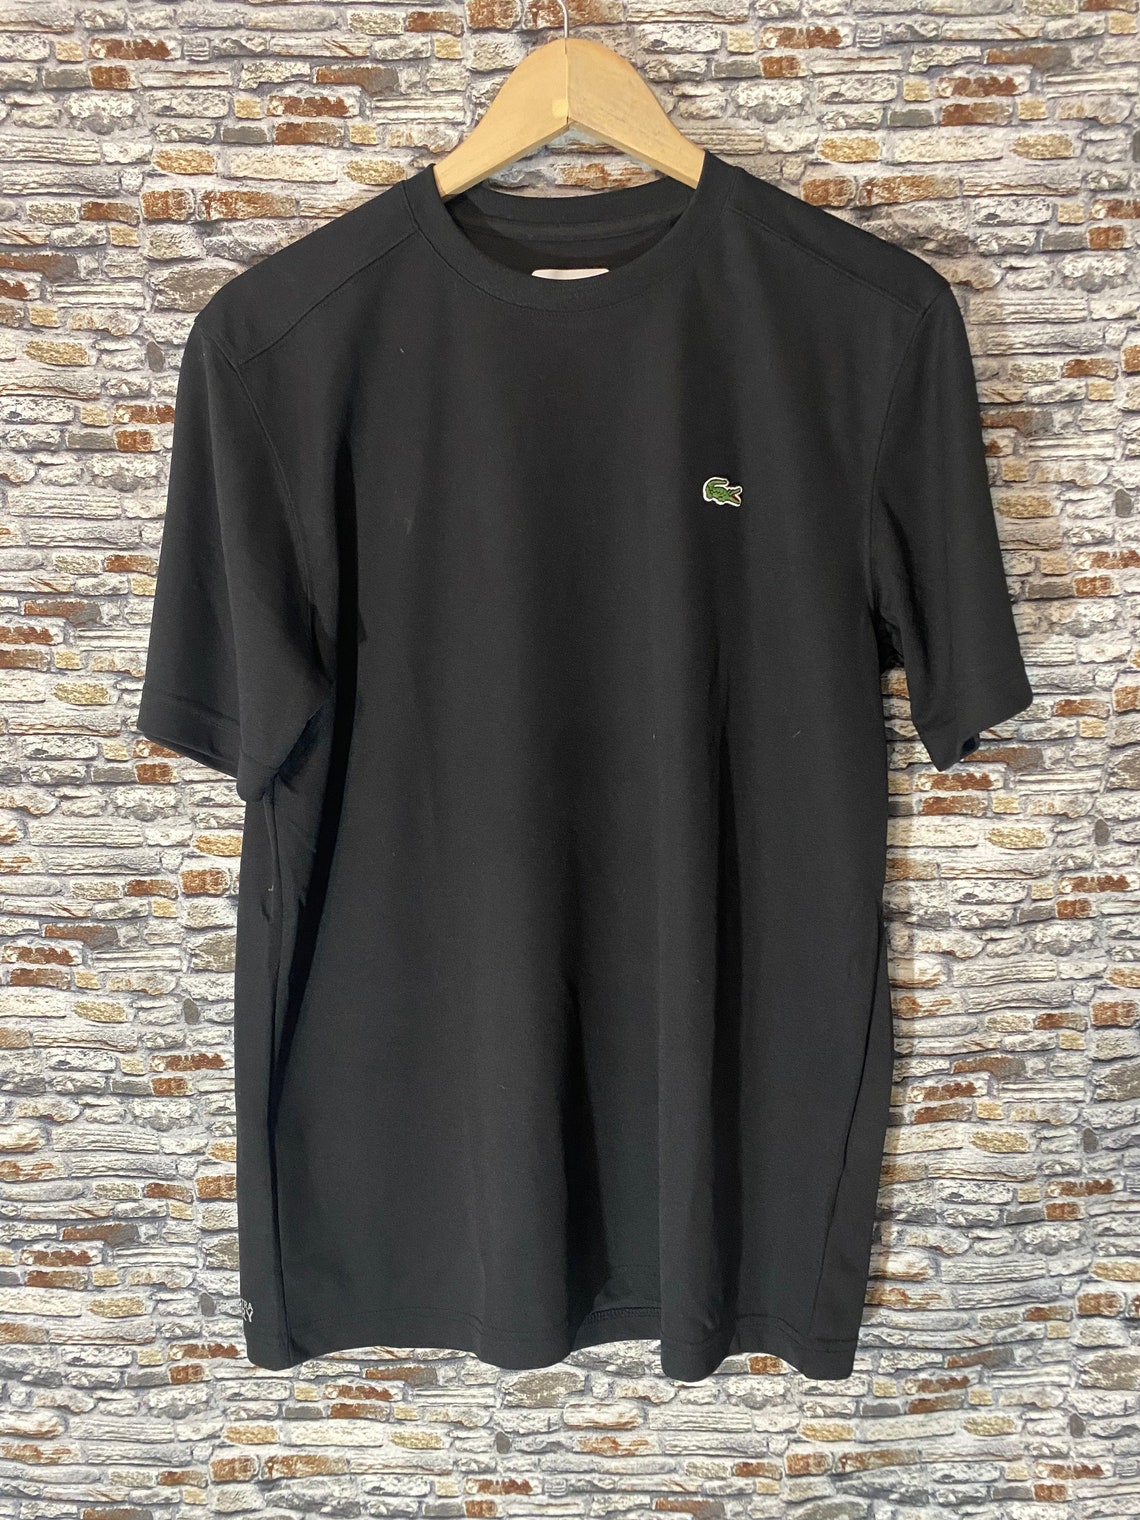 Lacoste Sport Shirt black M | Etsy